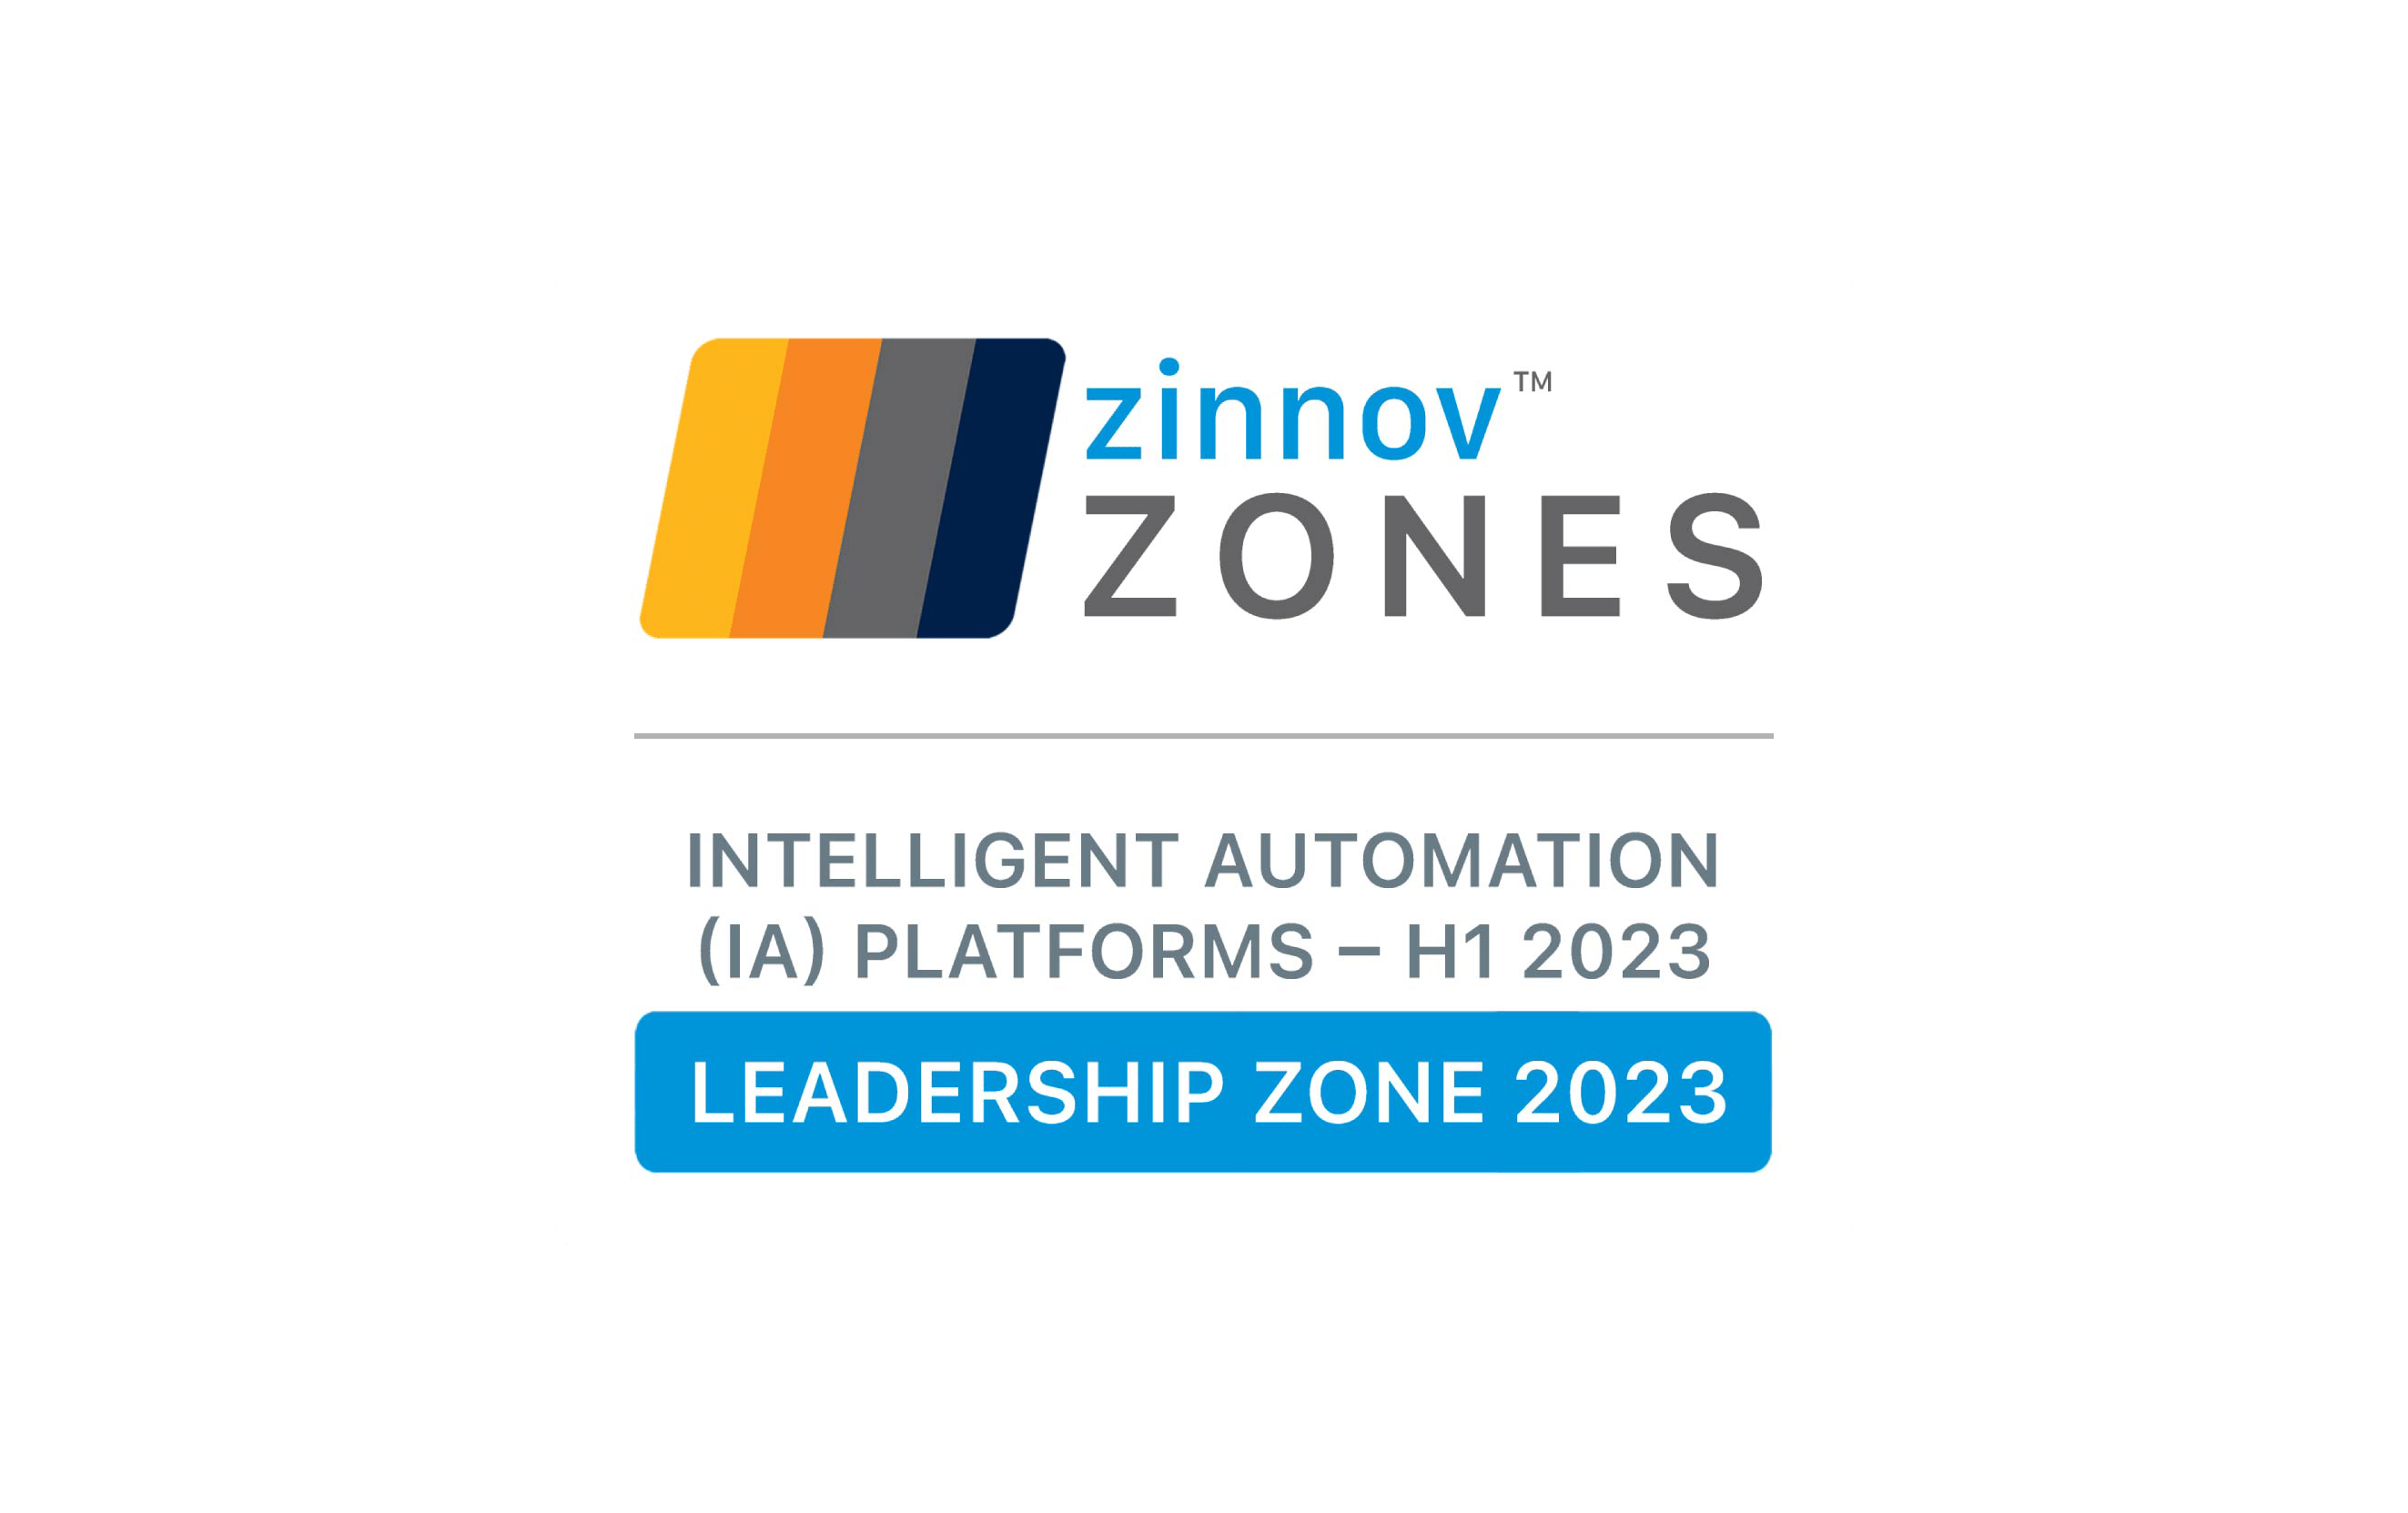 Zinnov Zones Intelligent Automation Leadership Zone Badge